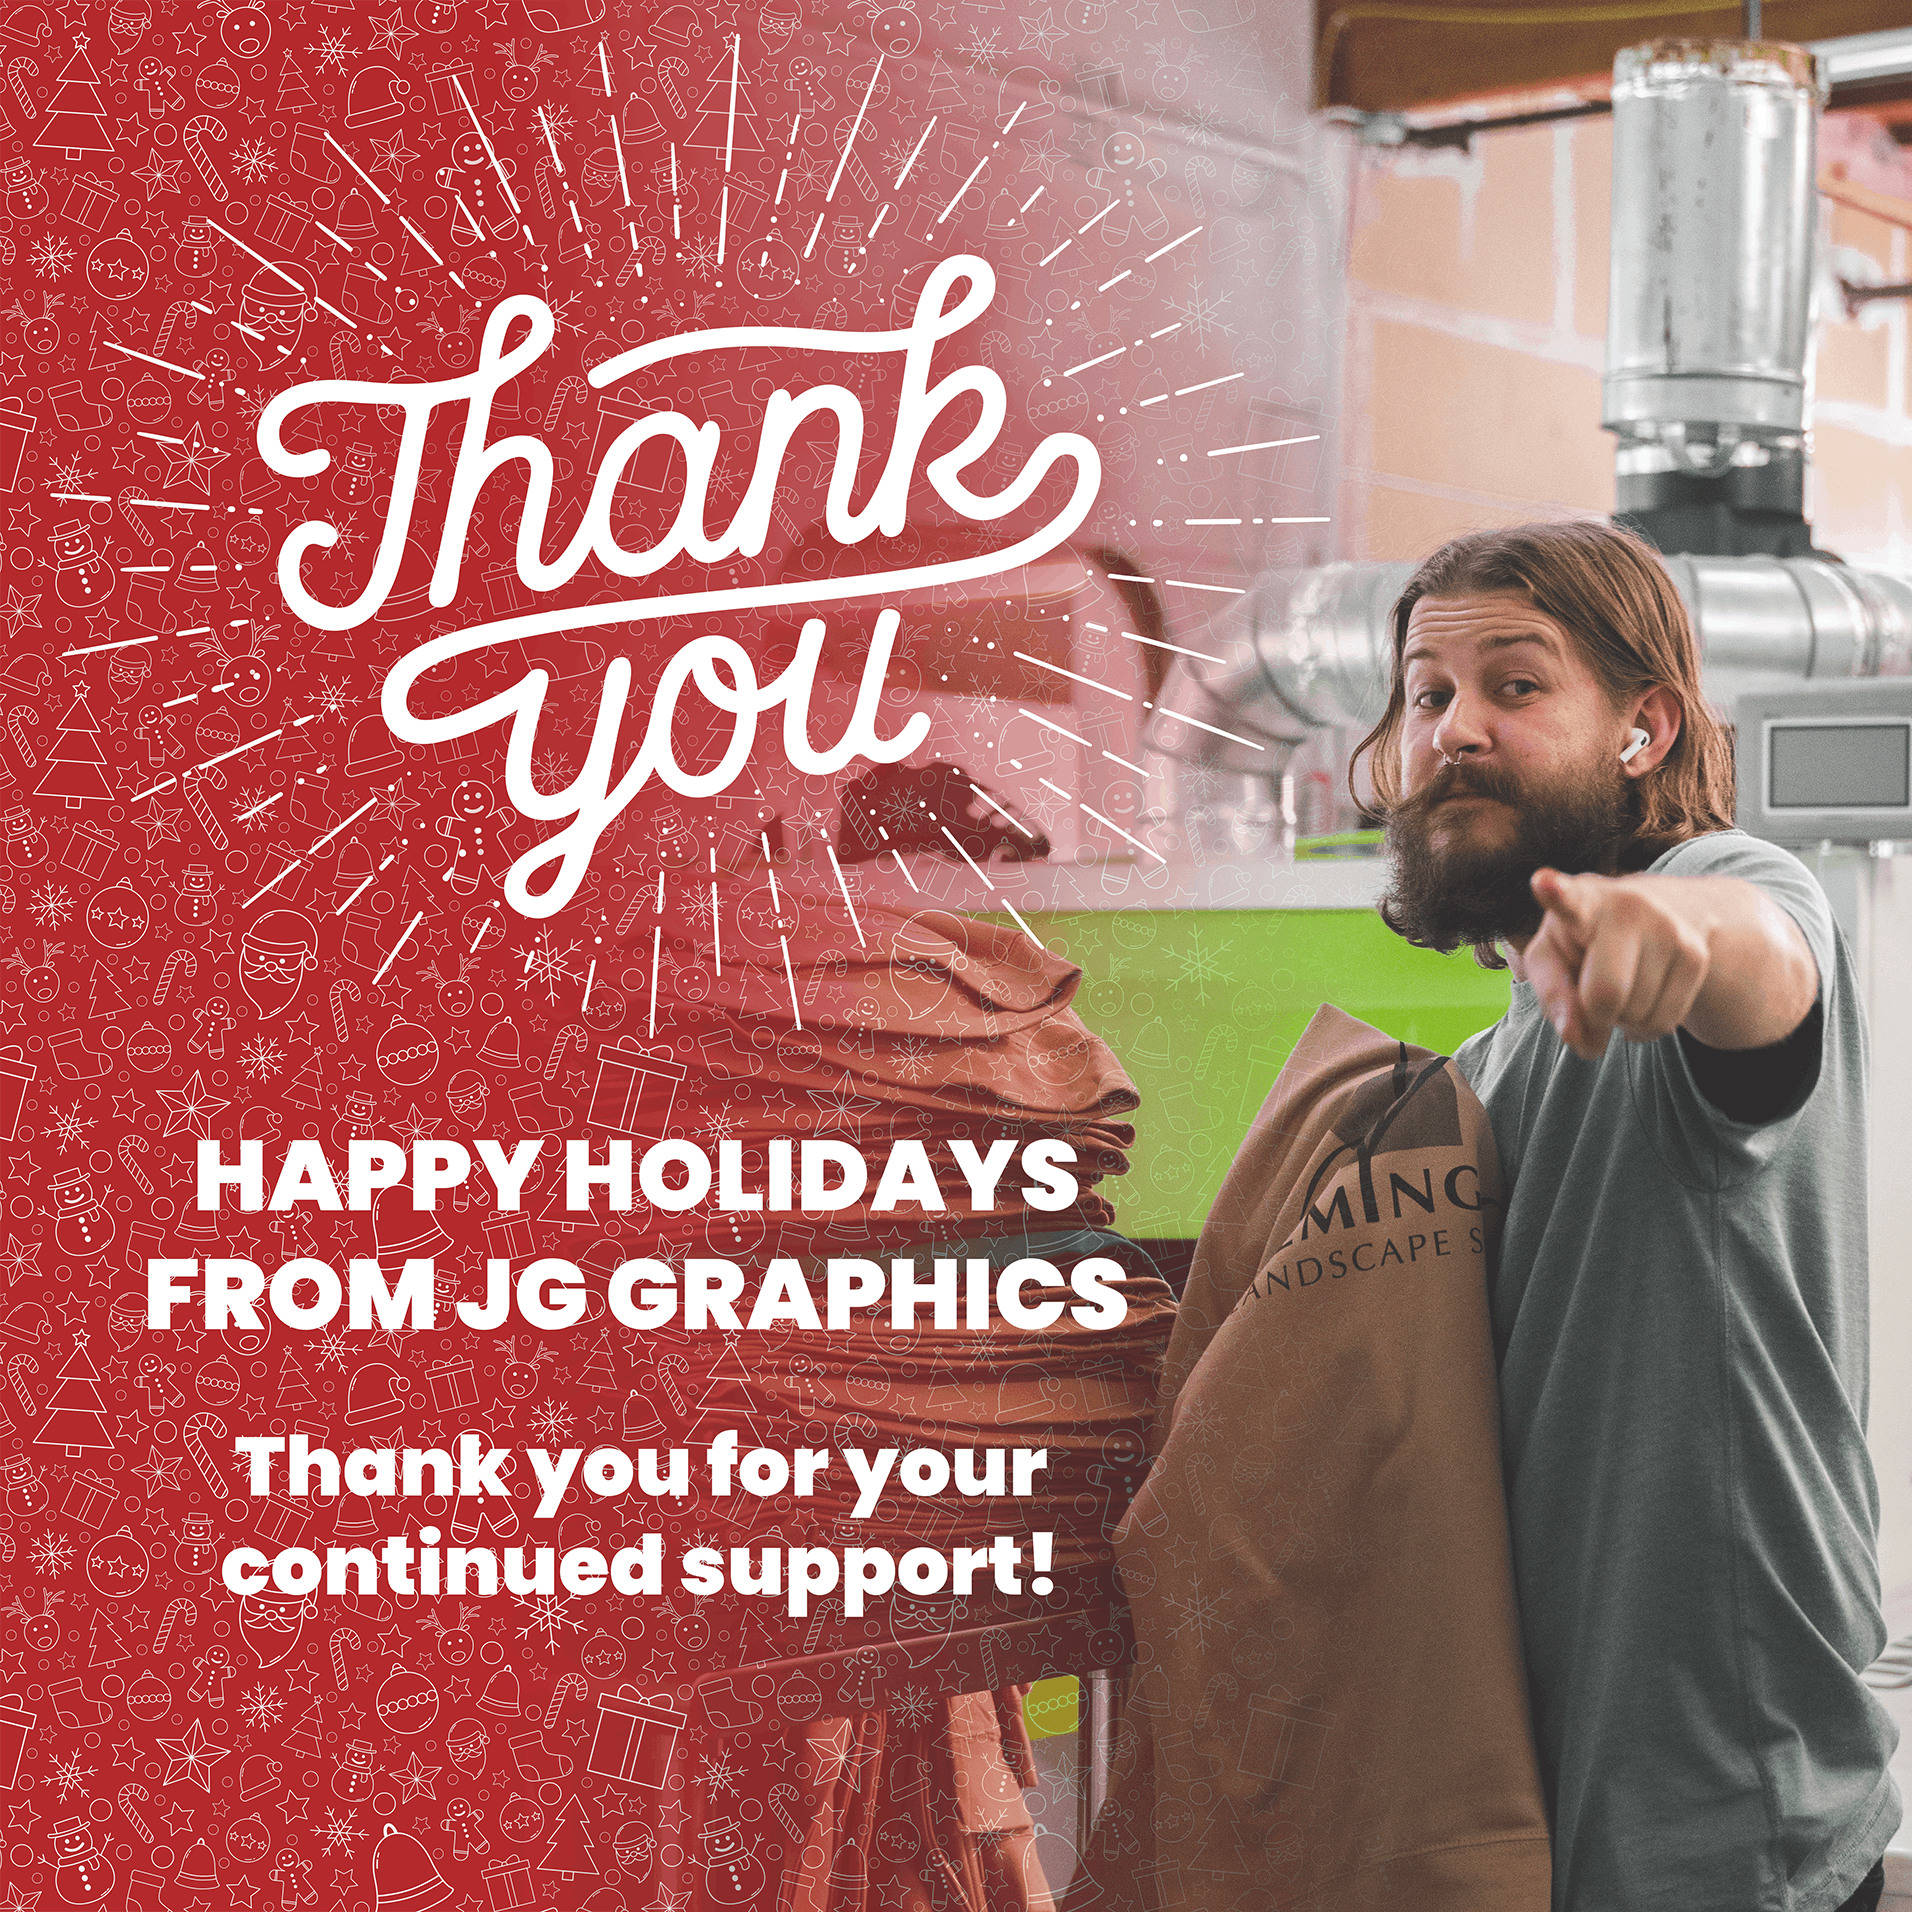 Thank you & Happy Holidays!